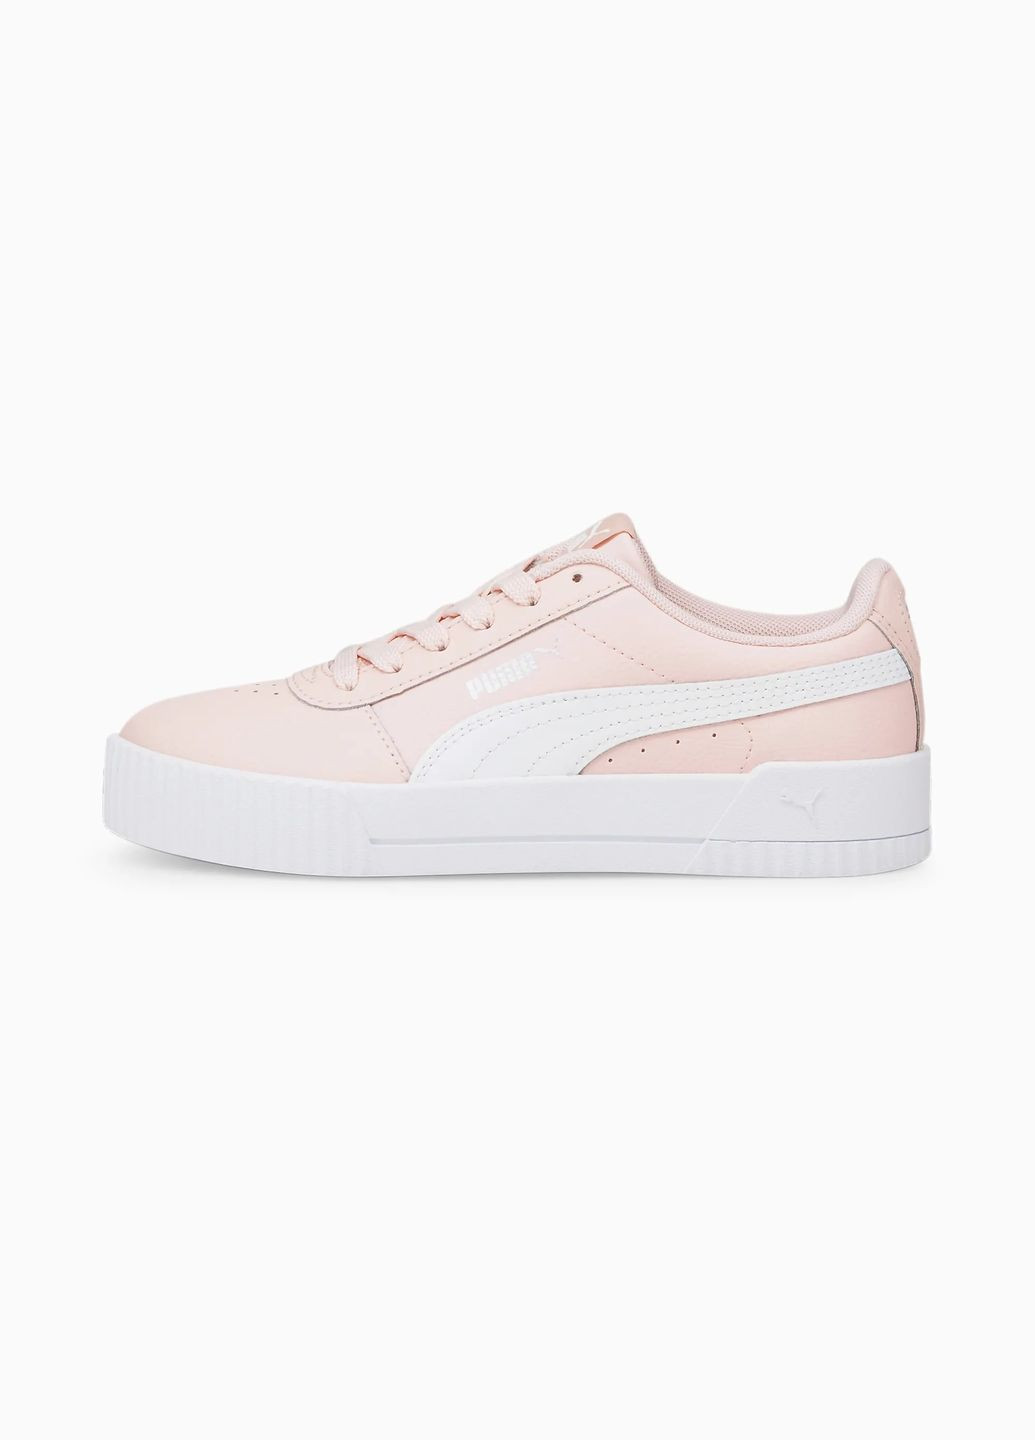 Розовые демисезонные кроссовки kids carina l chalk pink/white р. 4/35.5/22см Puma